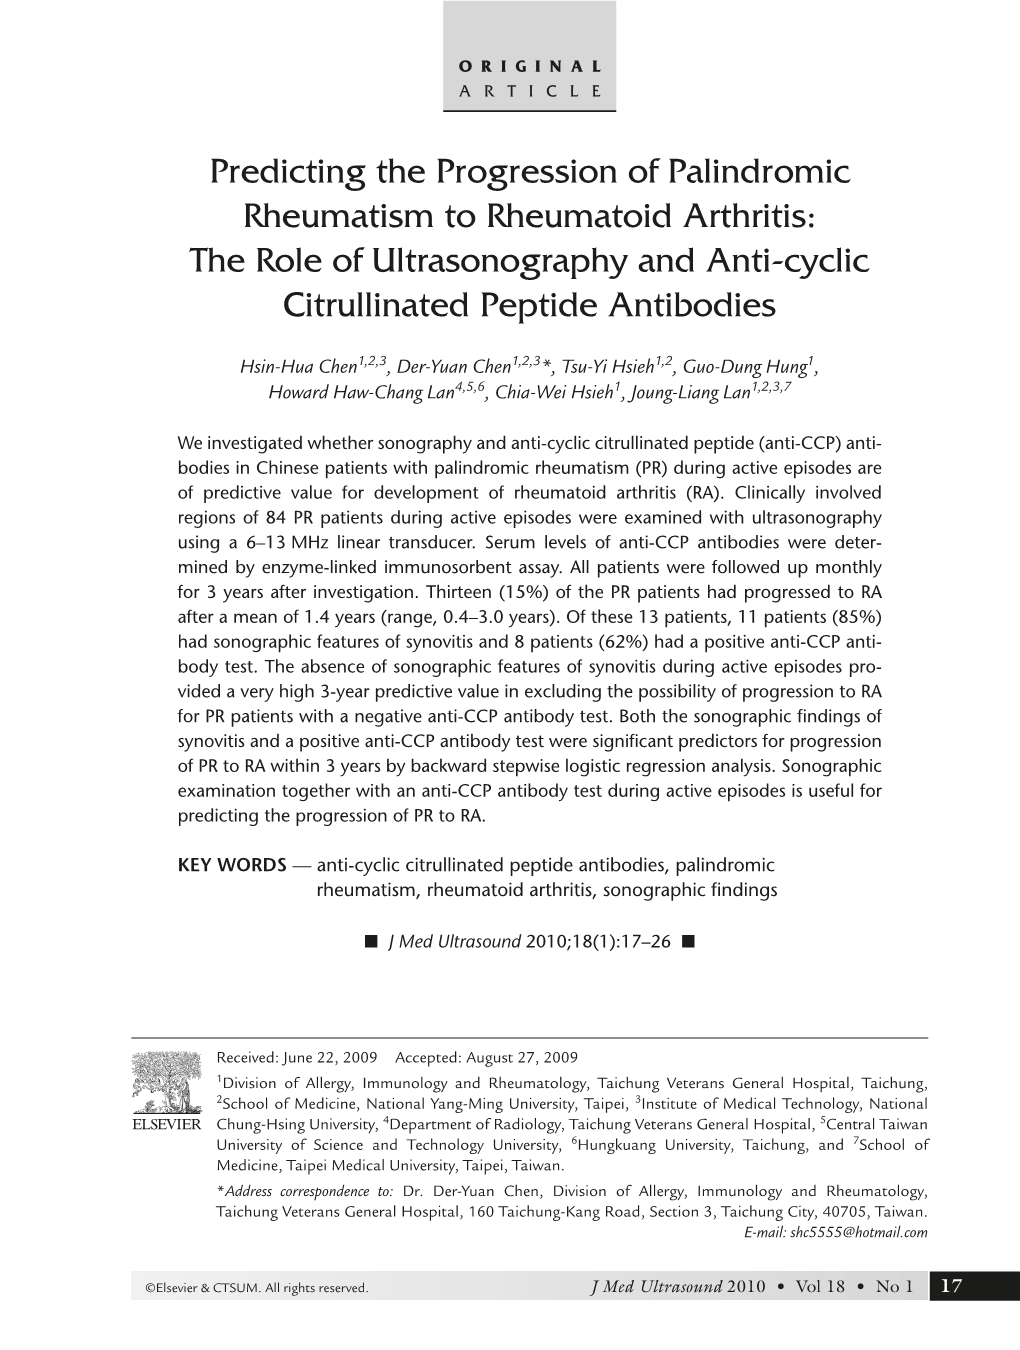 Predicting the Progression of Palindromic Rheumatism to Rheumatoid Arthritis: the Role of Ultrasonography and Anti-Cyclic Citrullinated Peptide Antibodies